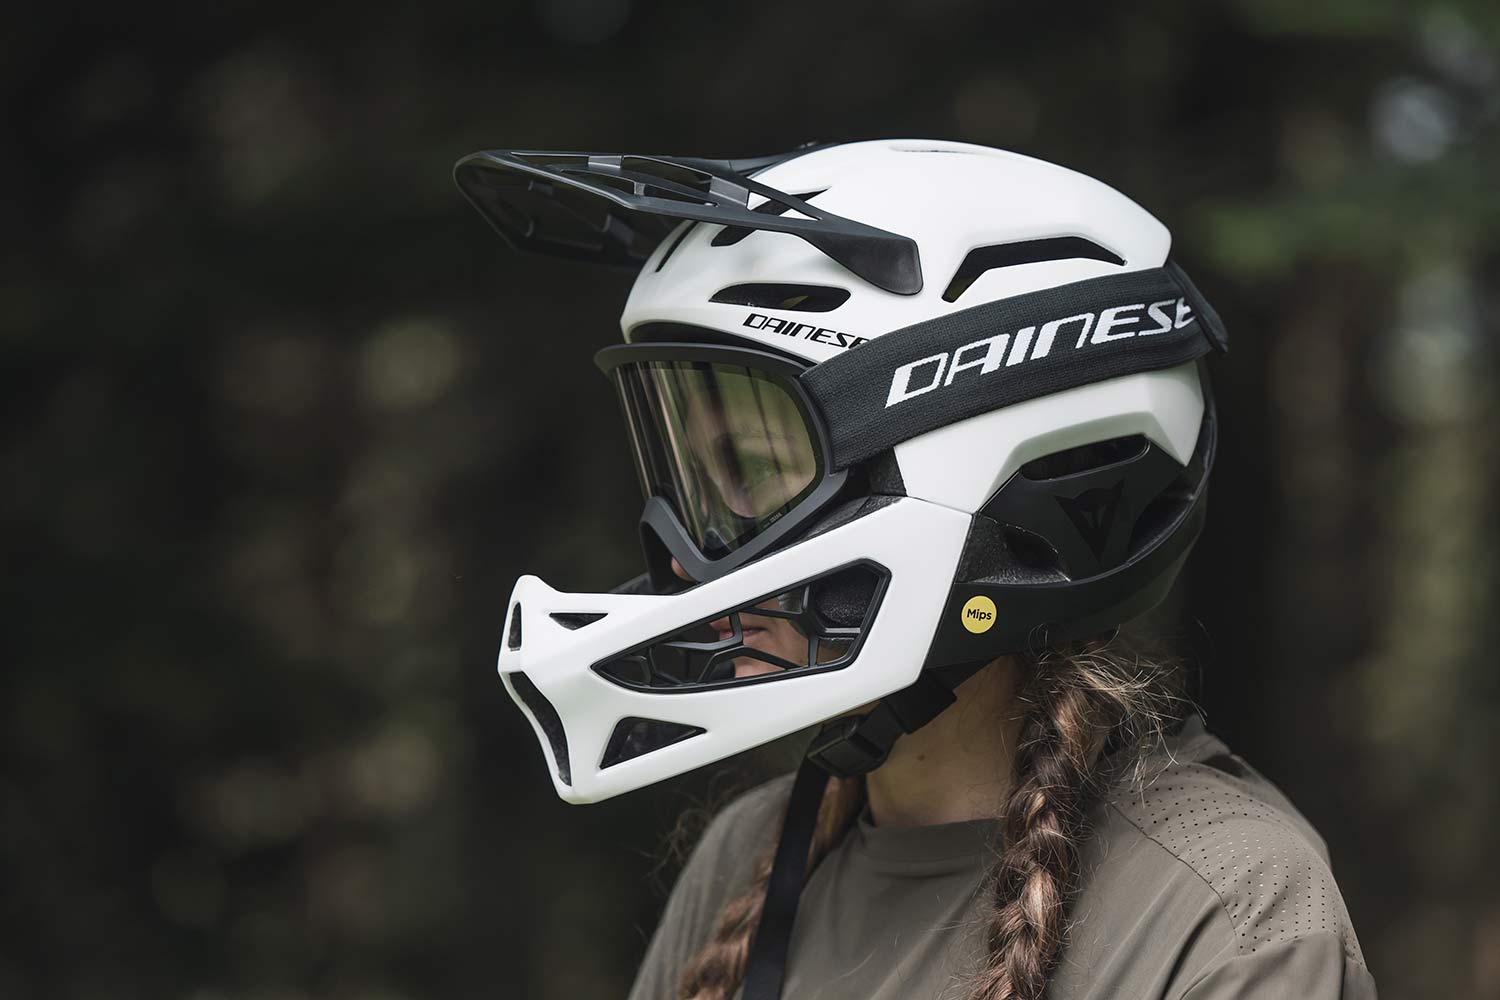 Dainese Linea 01 world's lightest full face helmet, lightweight MIPS DH MTB protection at 570g, Mountain Bike Connection rider Kasia Szlezak, photos by Rupert Fowler, side